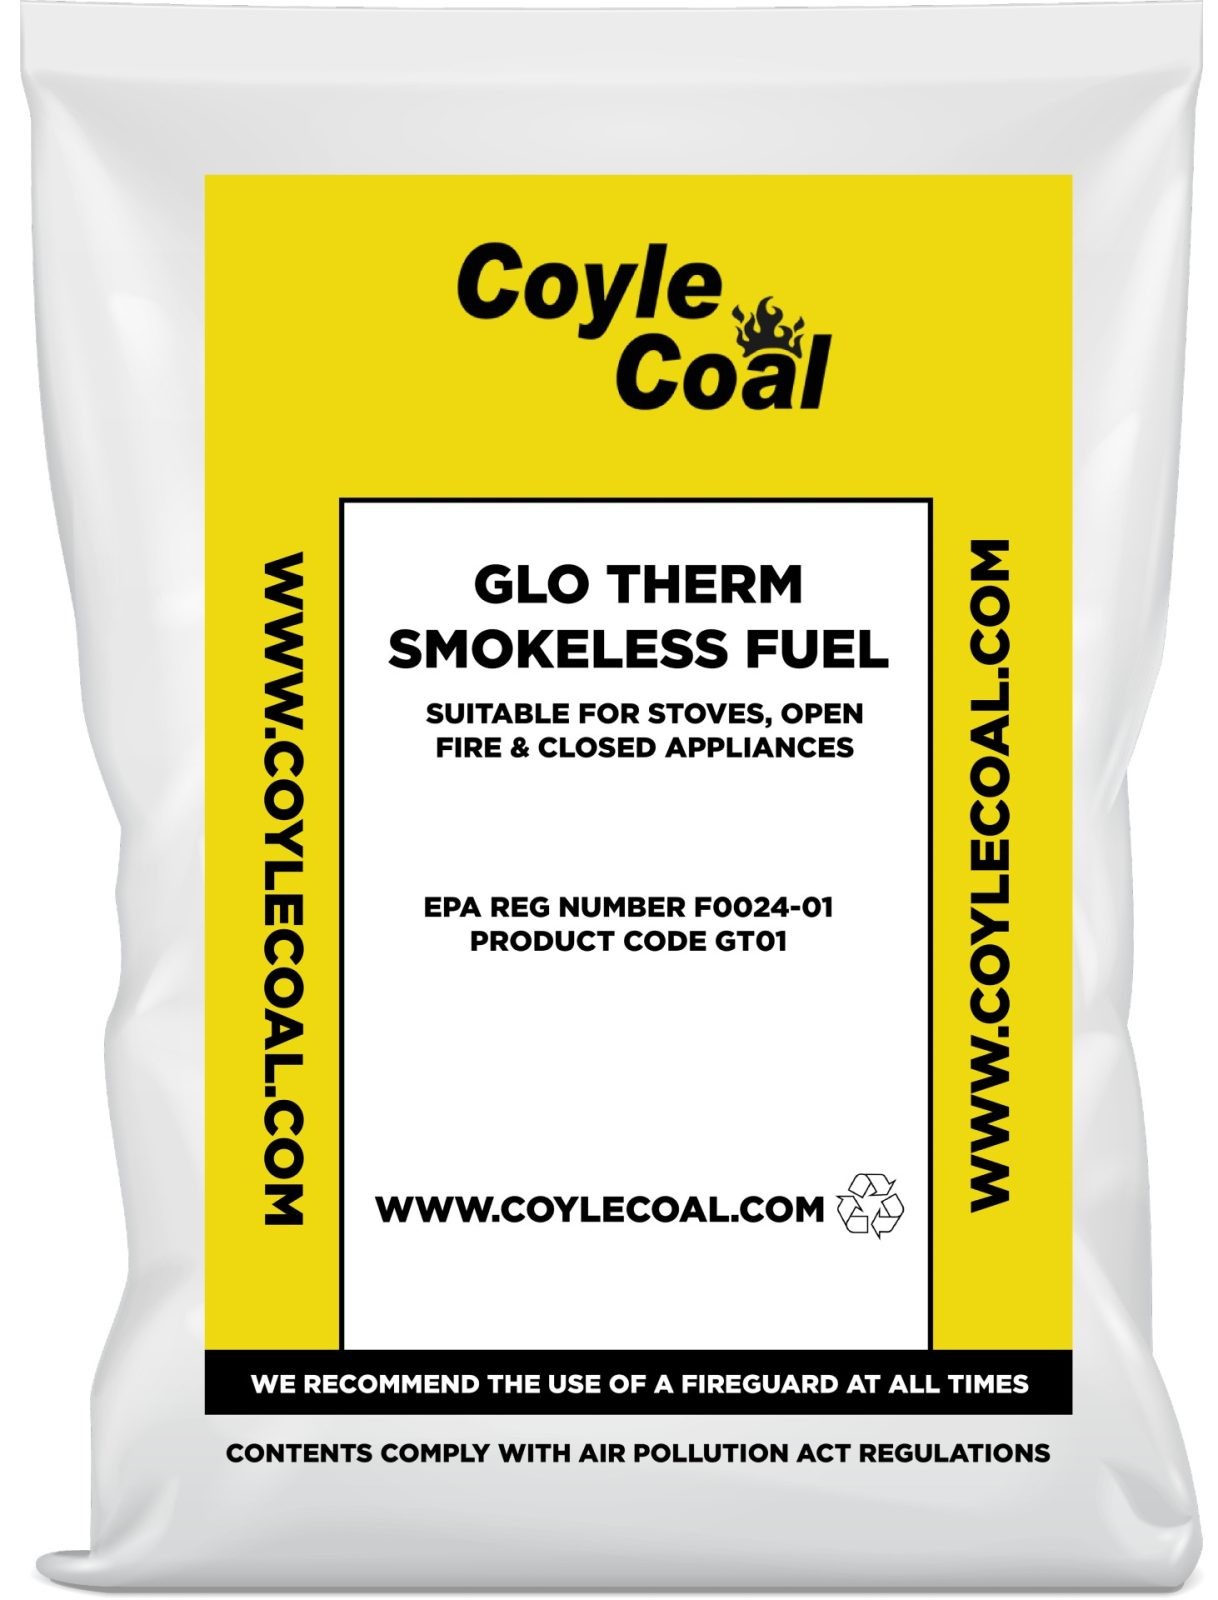 Coyle Coal Glo Therm Smokeless Fuel